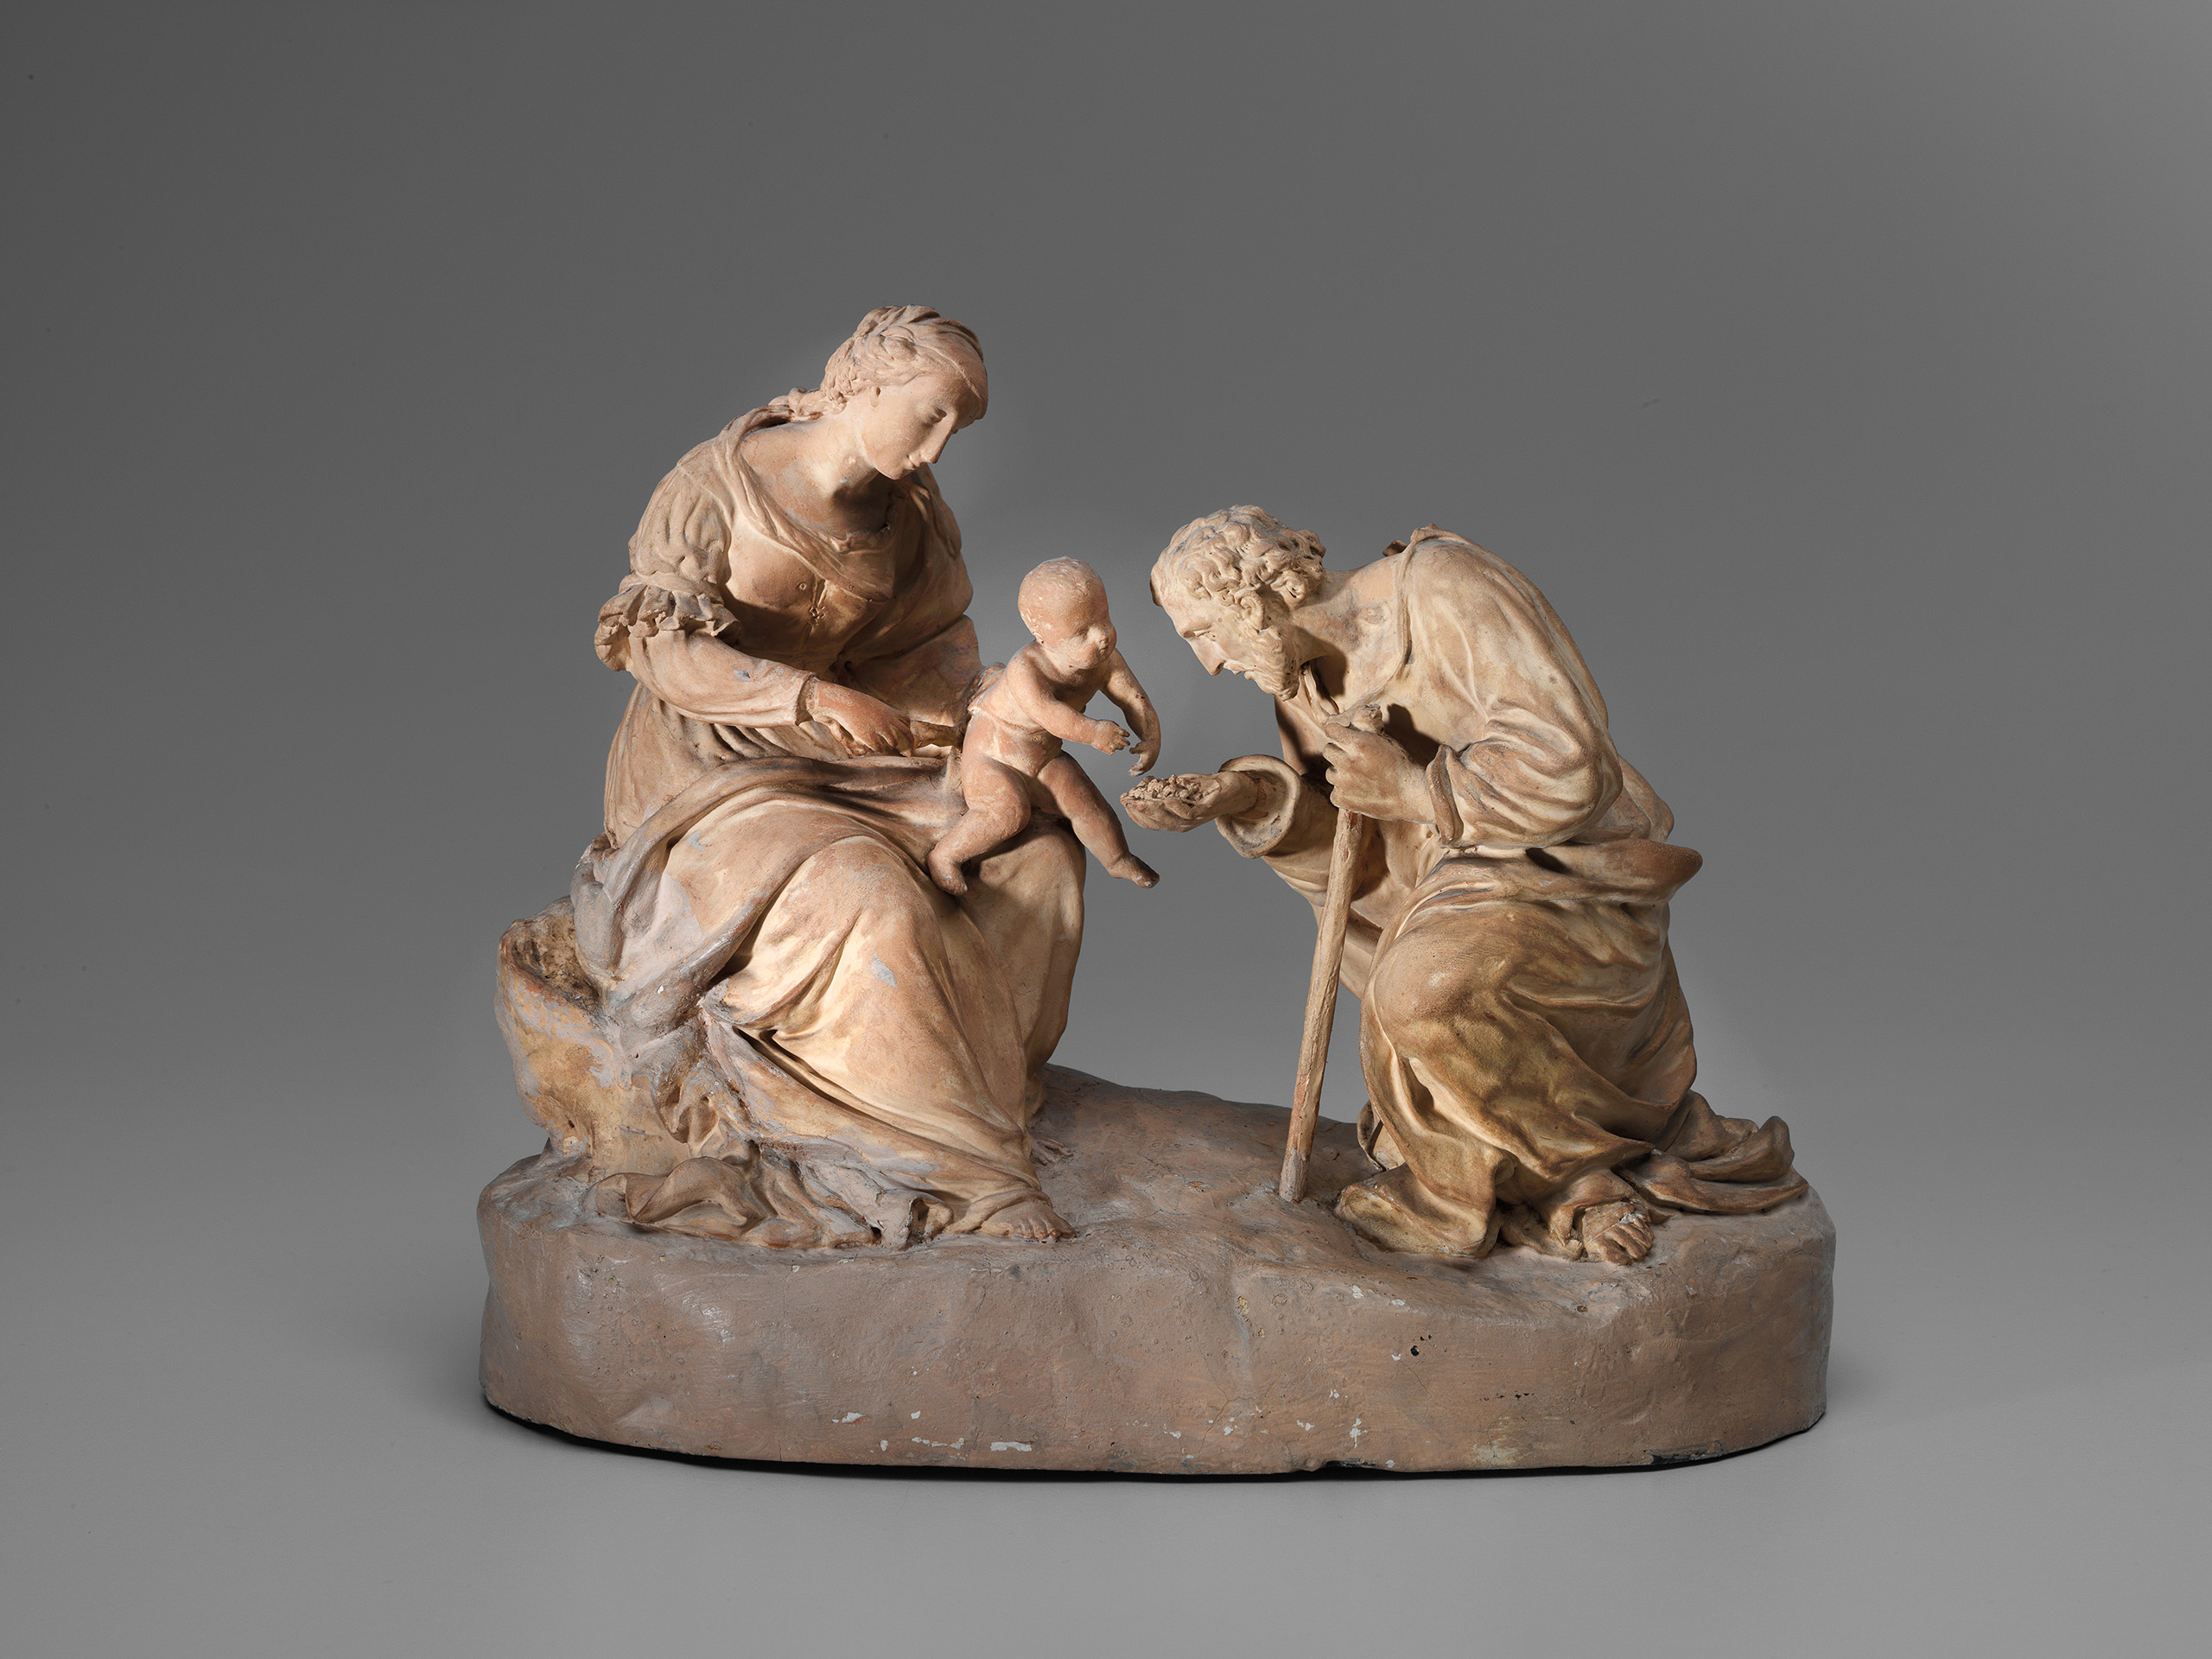 Figures of Mary, the baby Jesus and shepherd